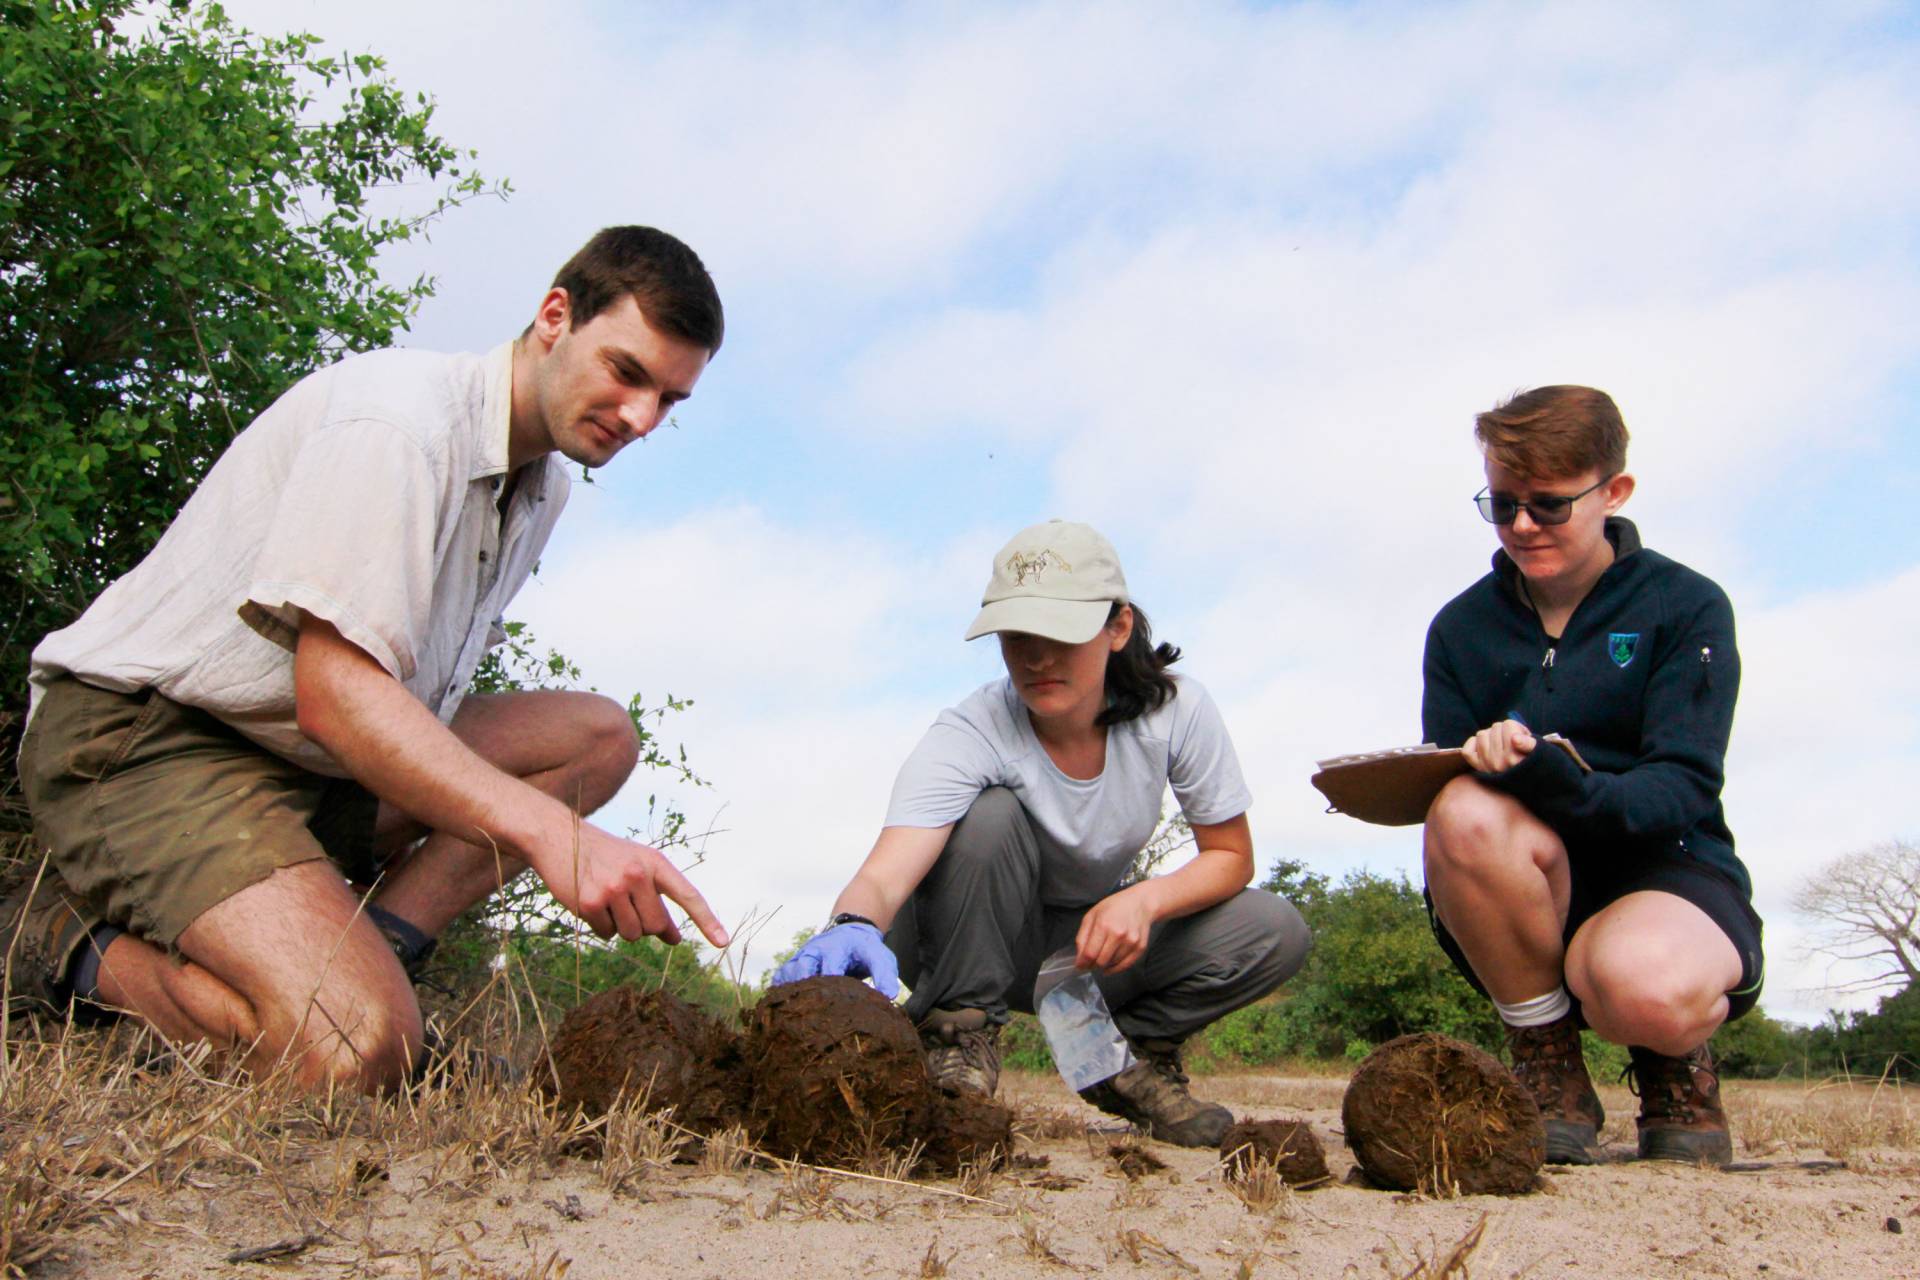 three people examine a pile on the ground